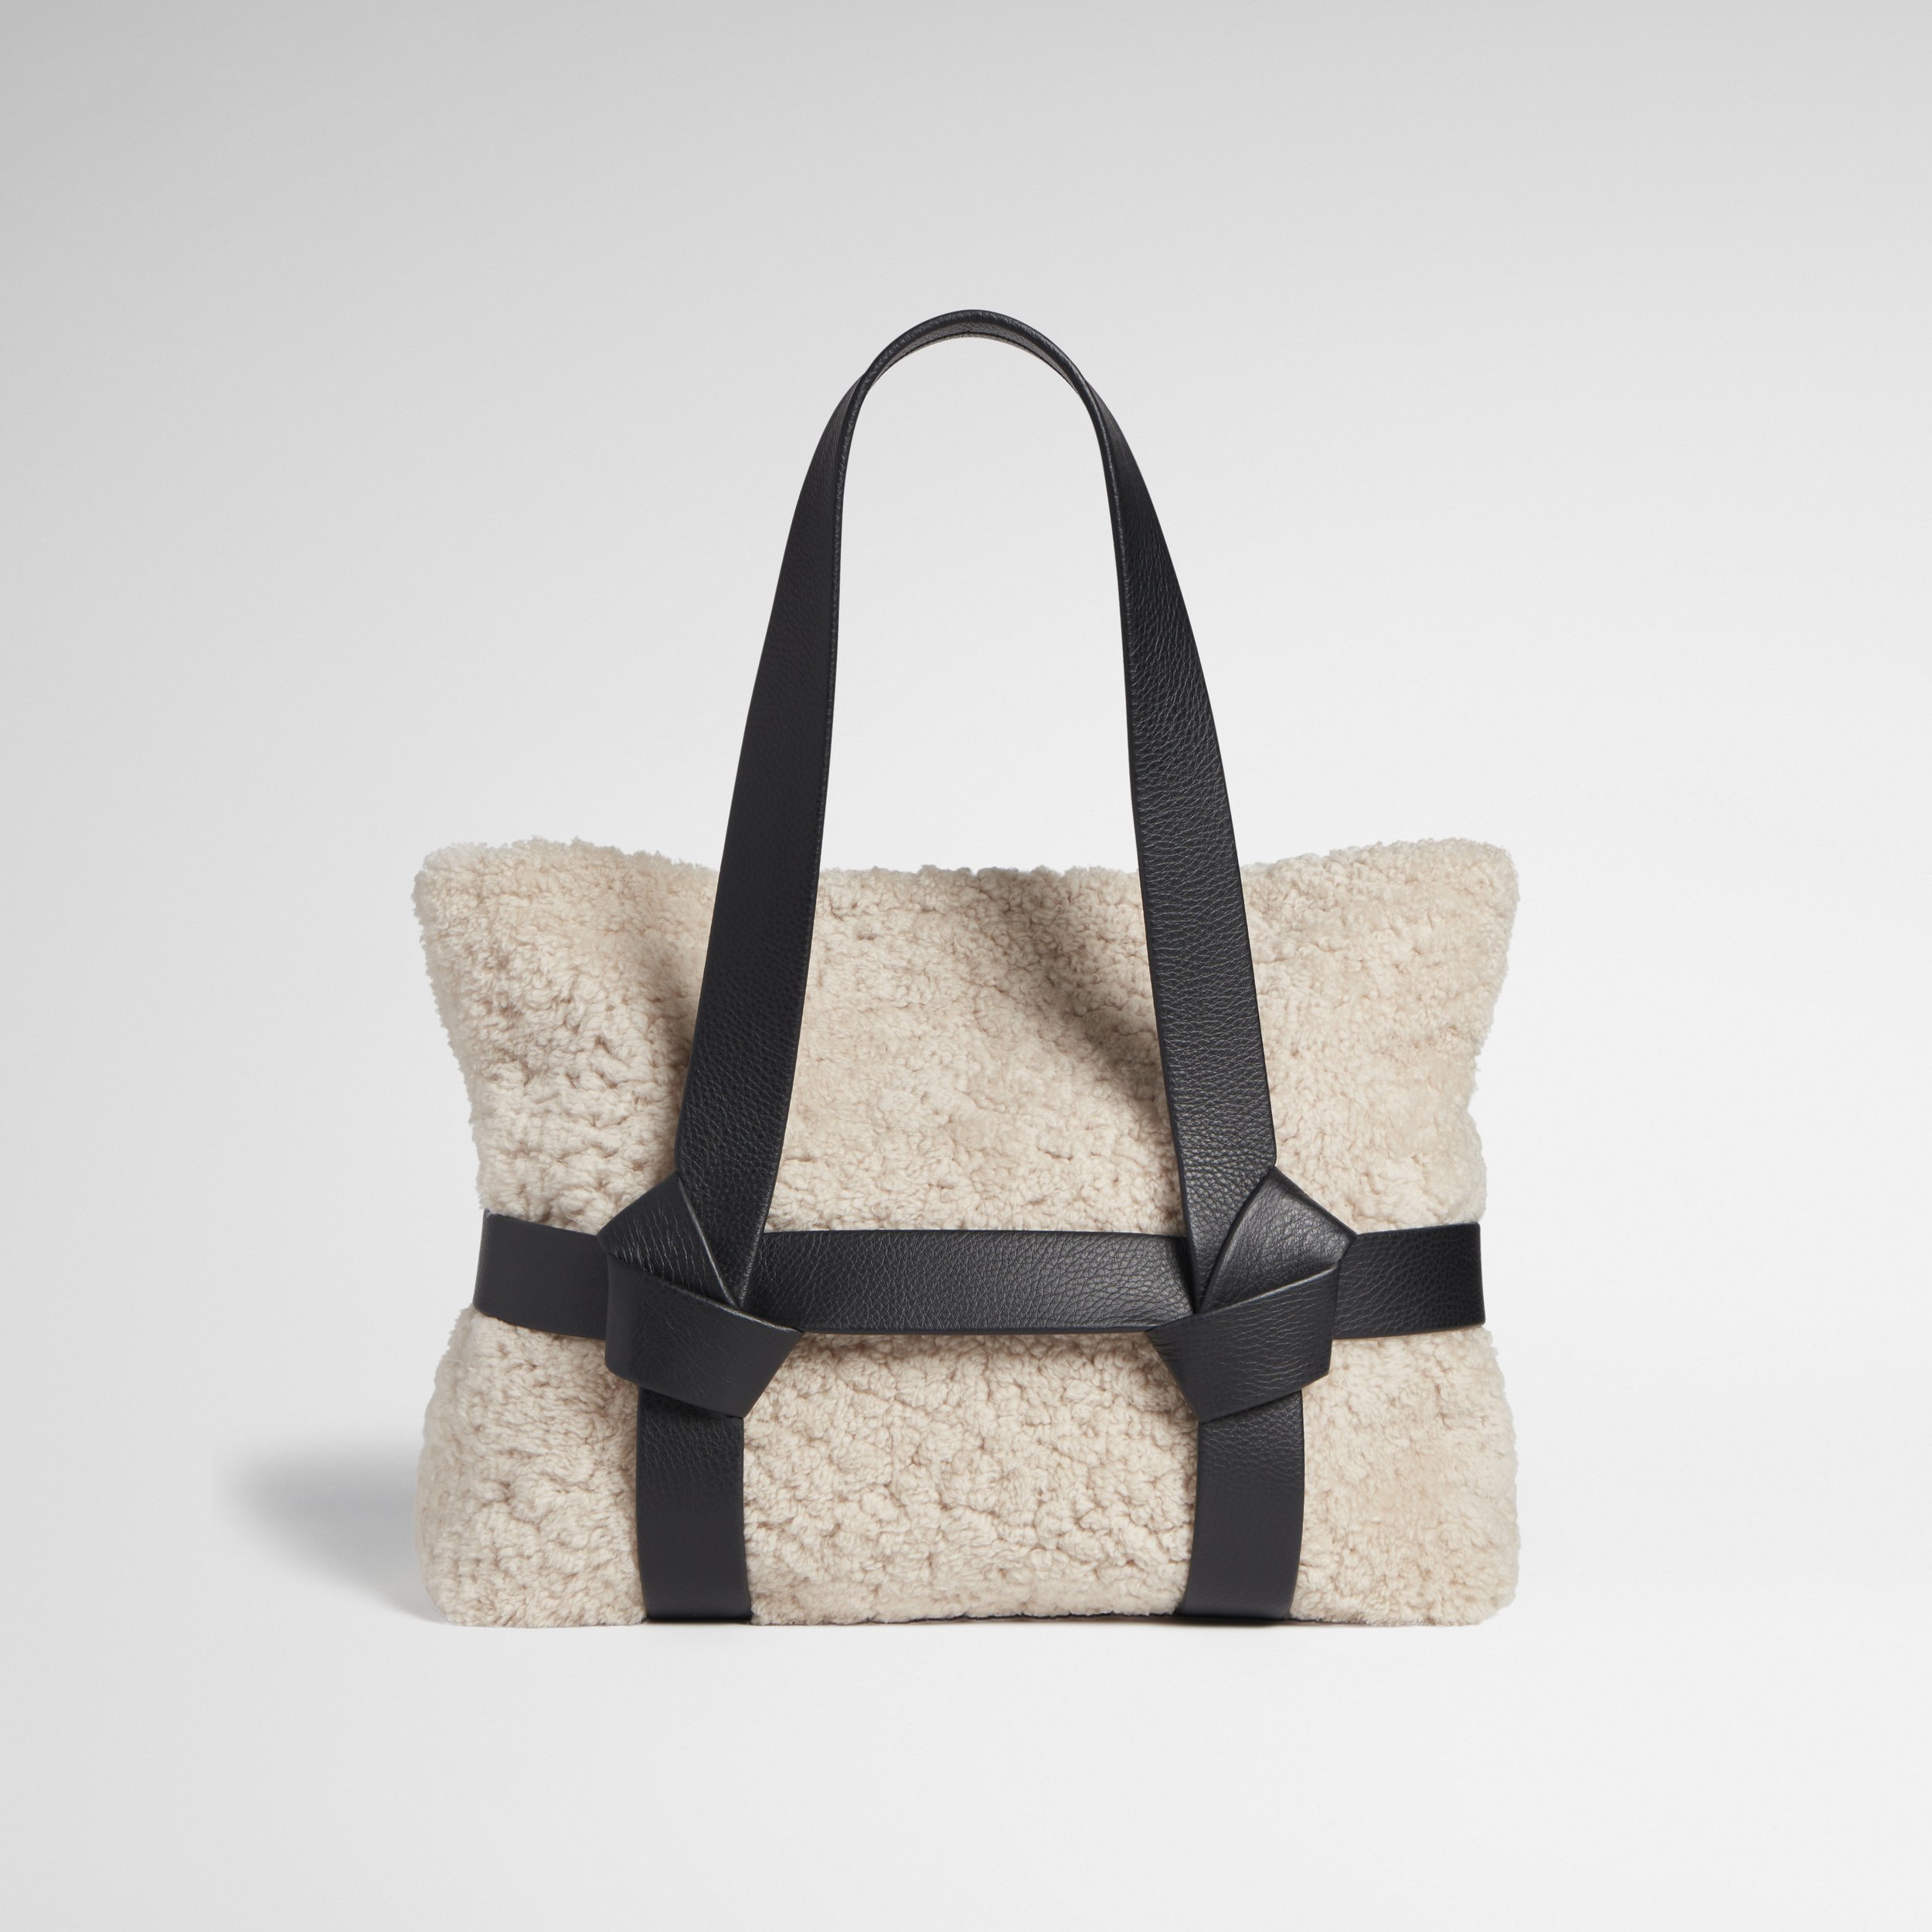 NJR057_Obi Bag & Strap_bone shearling bag with black strap_A.jpg